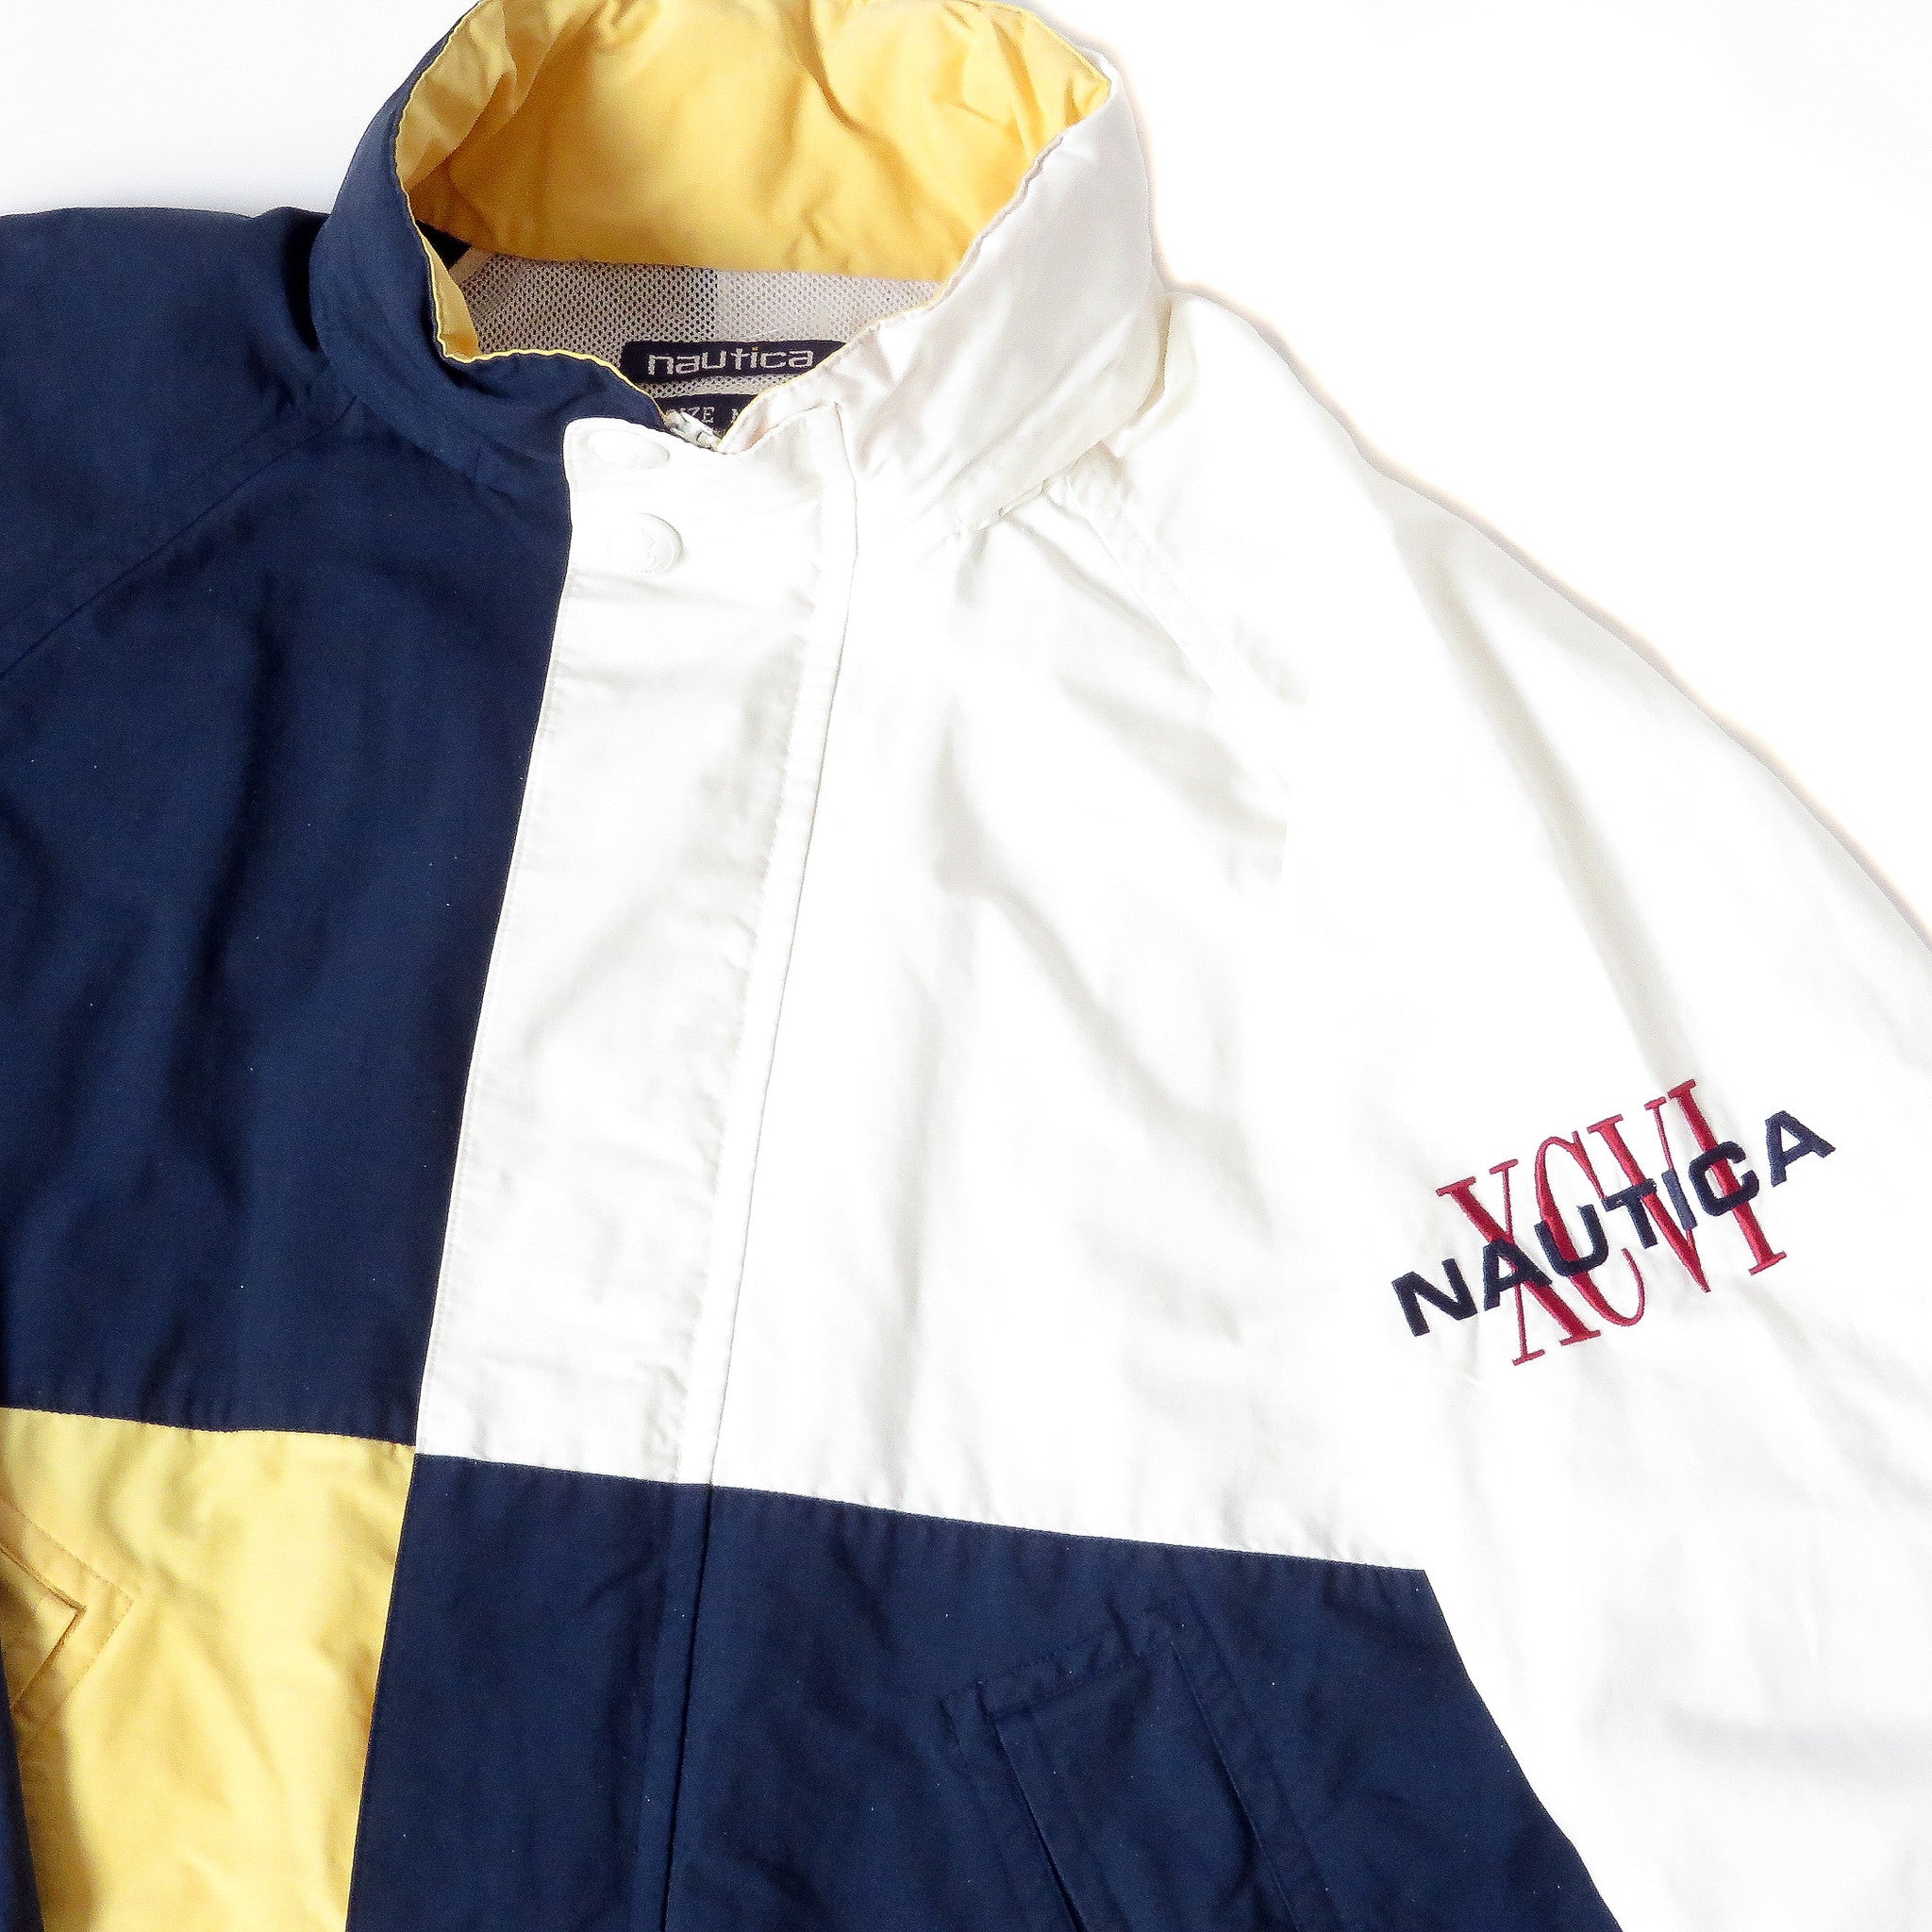 Vintage Nautica Color Block Jacket Sz M